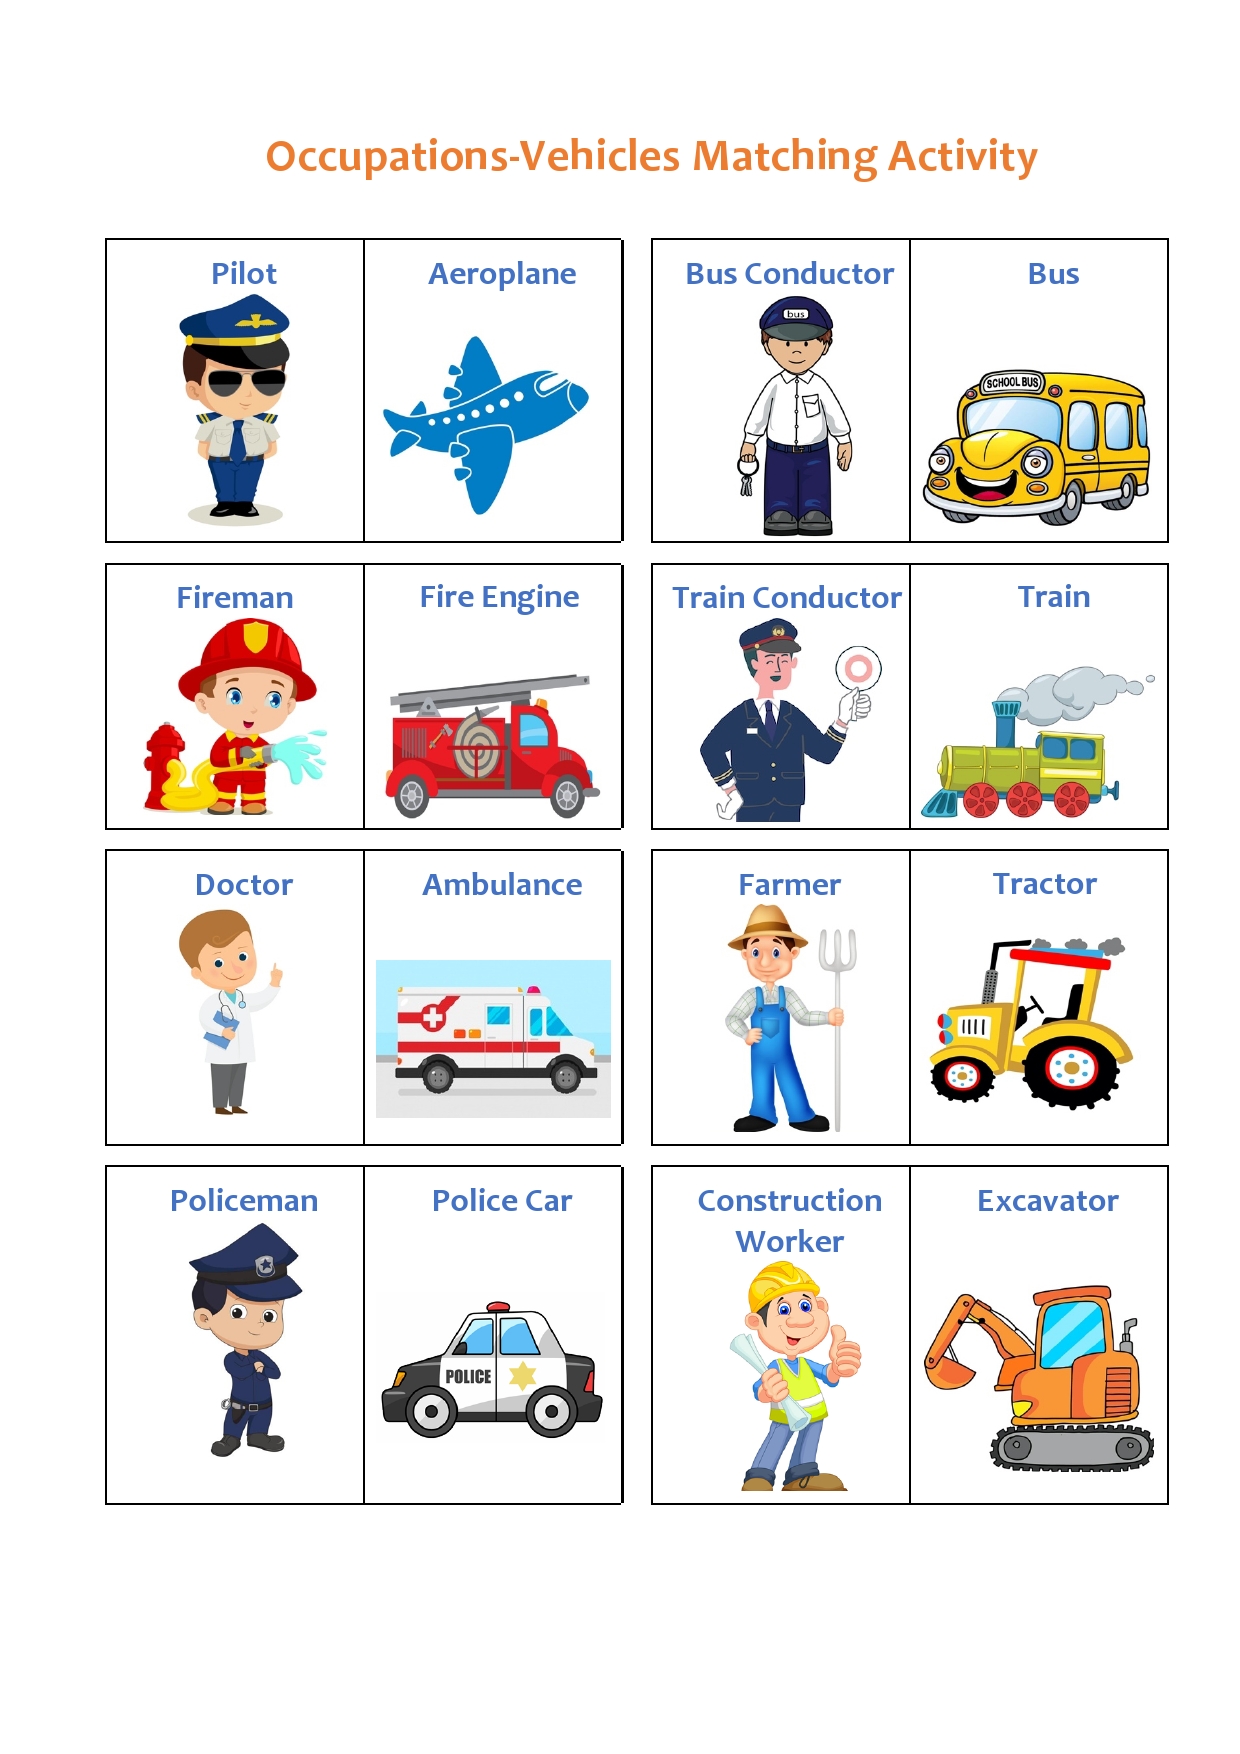 occupations-vehicles-matching-activity-teachersmag